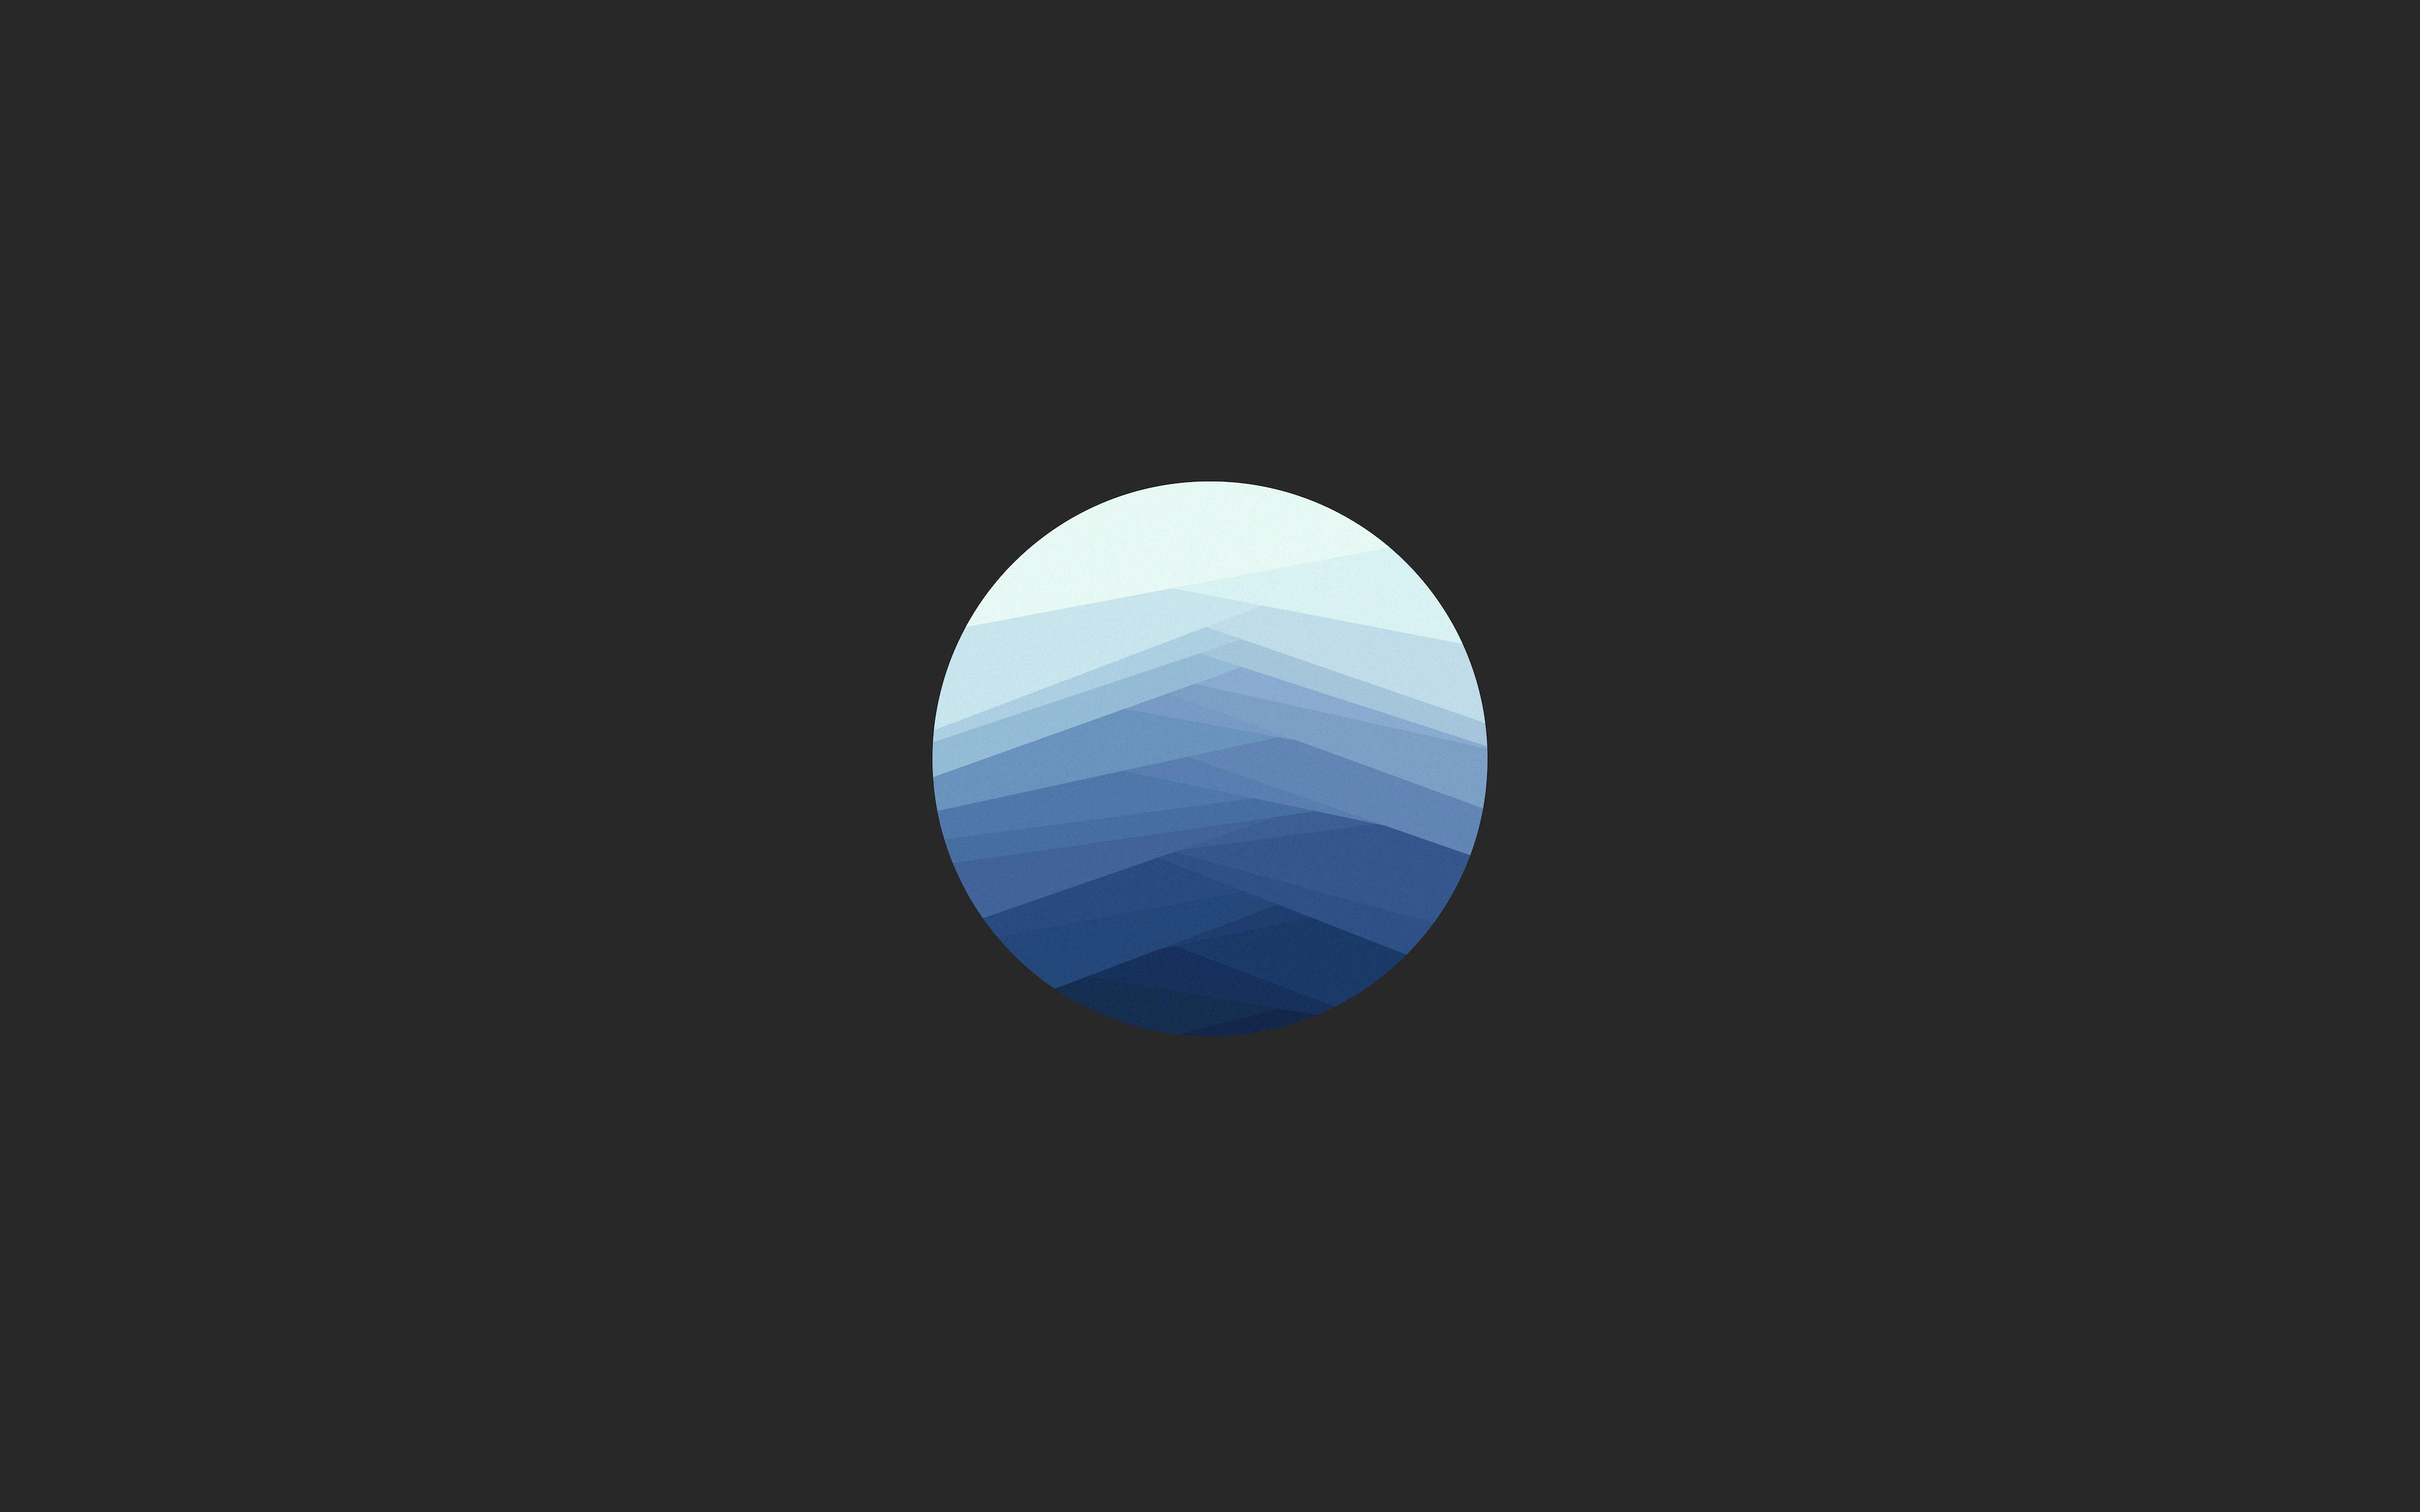 Minimal Blue Sphere [3840 x 2400]